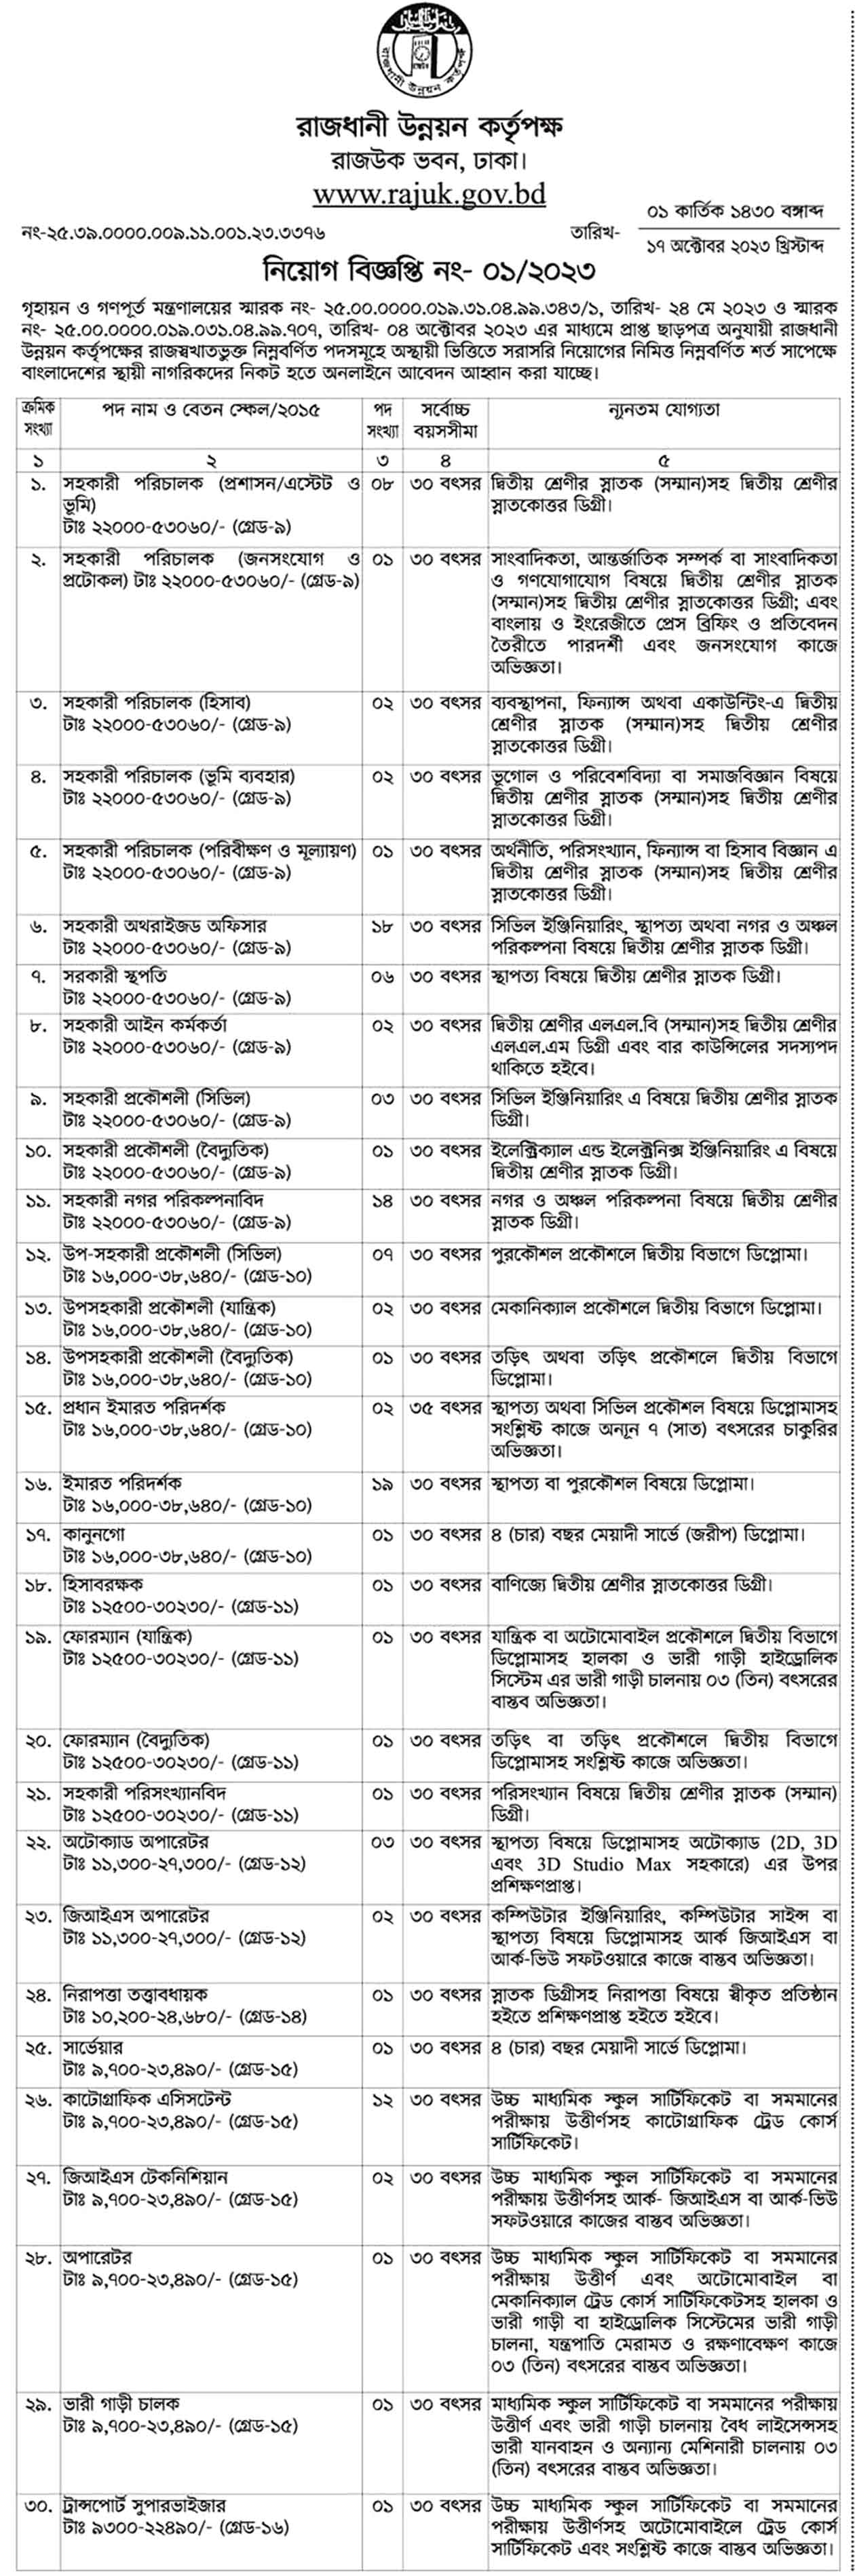 Rajdhani Unnayan Kartipakkha (RAJUK) job circular- 2023 for law graduates